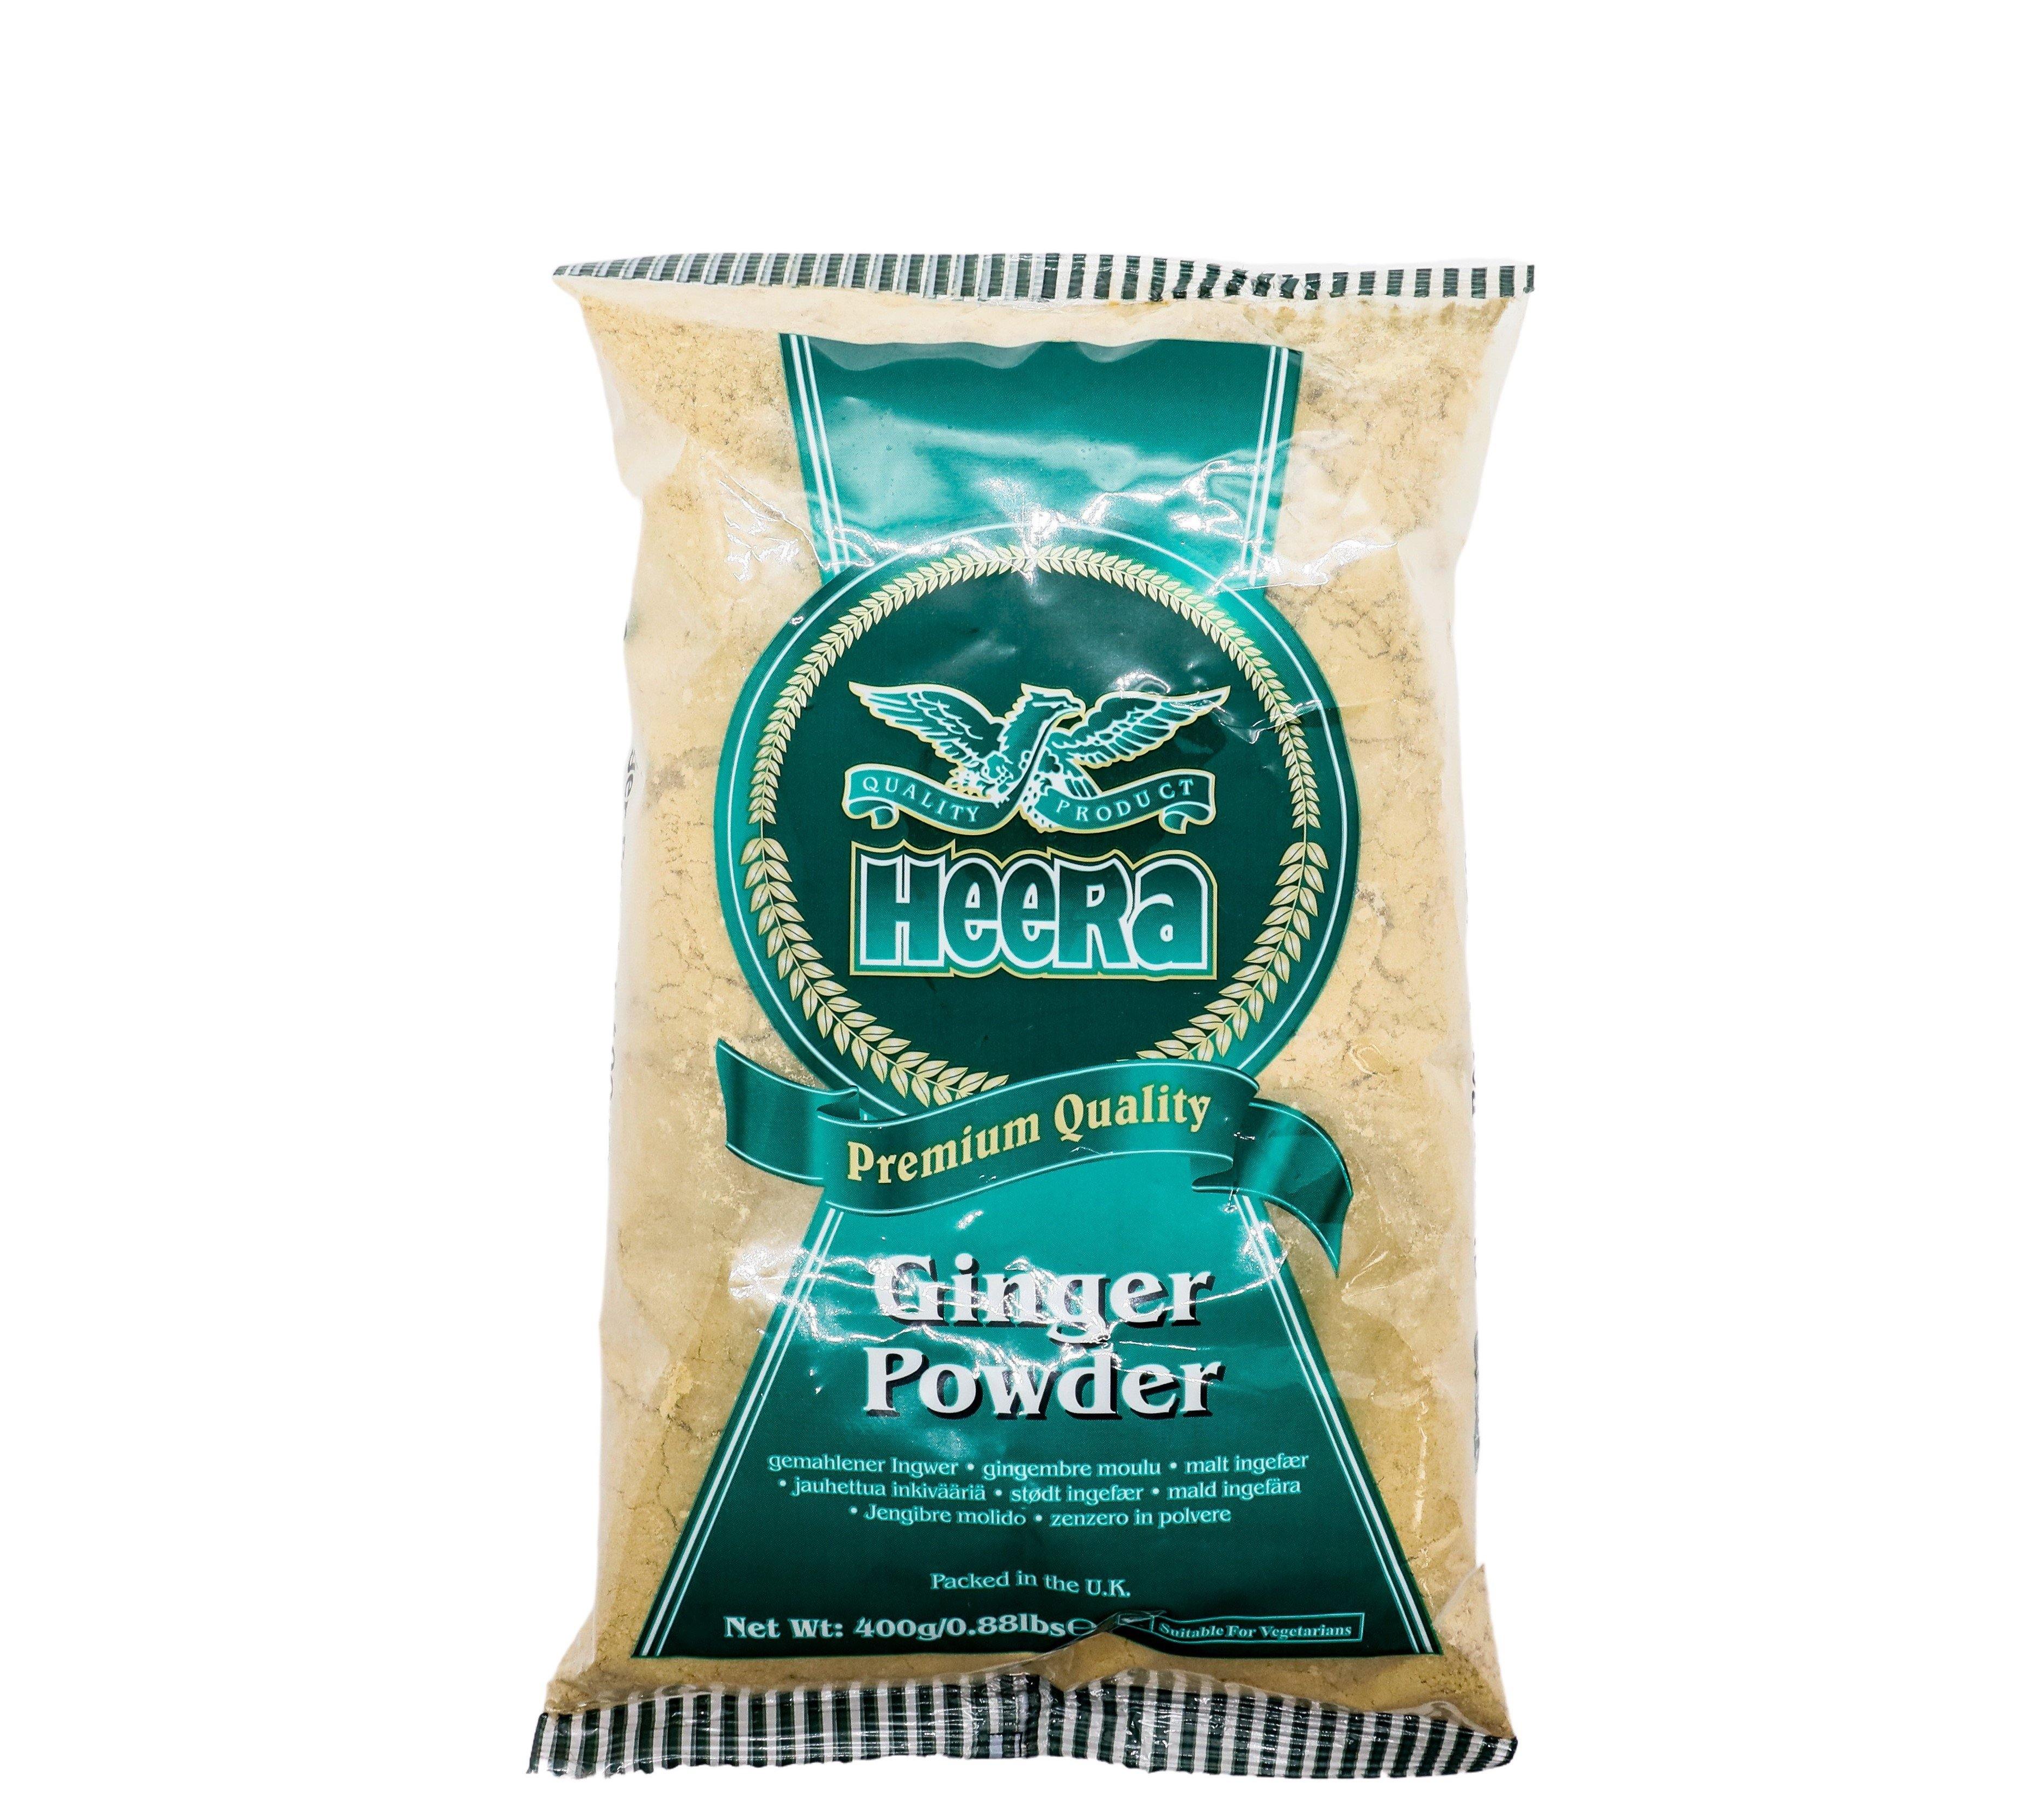 Heera ginger powder SaveCo Bradford